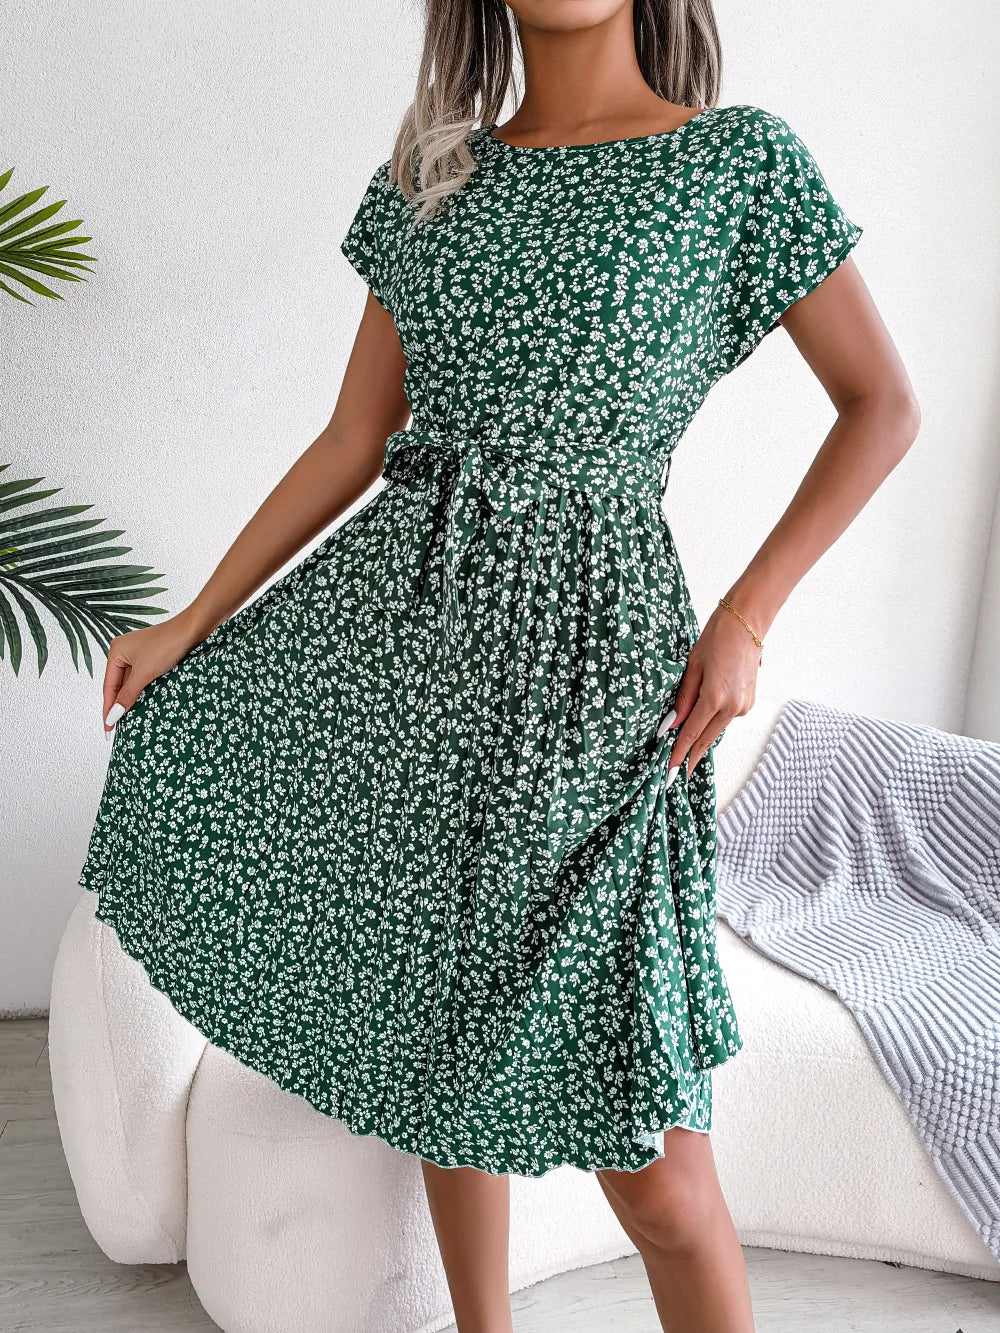 Green Spring/Summer Floral Pleated A-Line Dress with Short Sleeves - Effortlessly Elegant